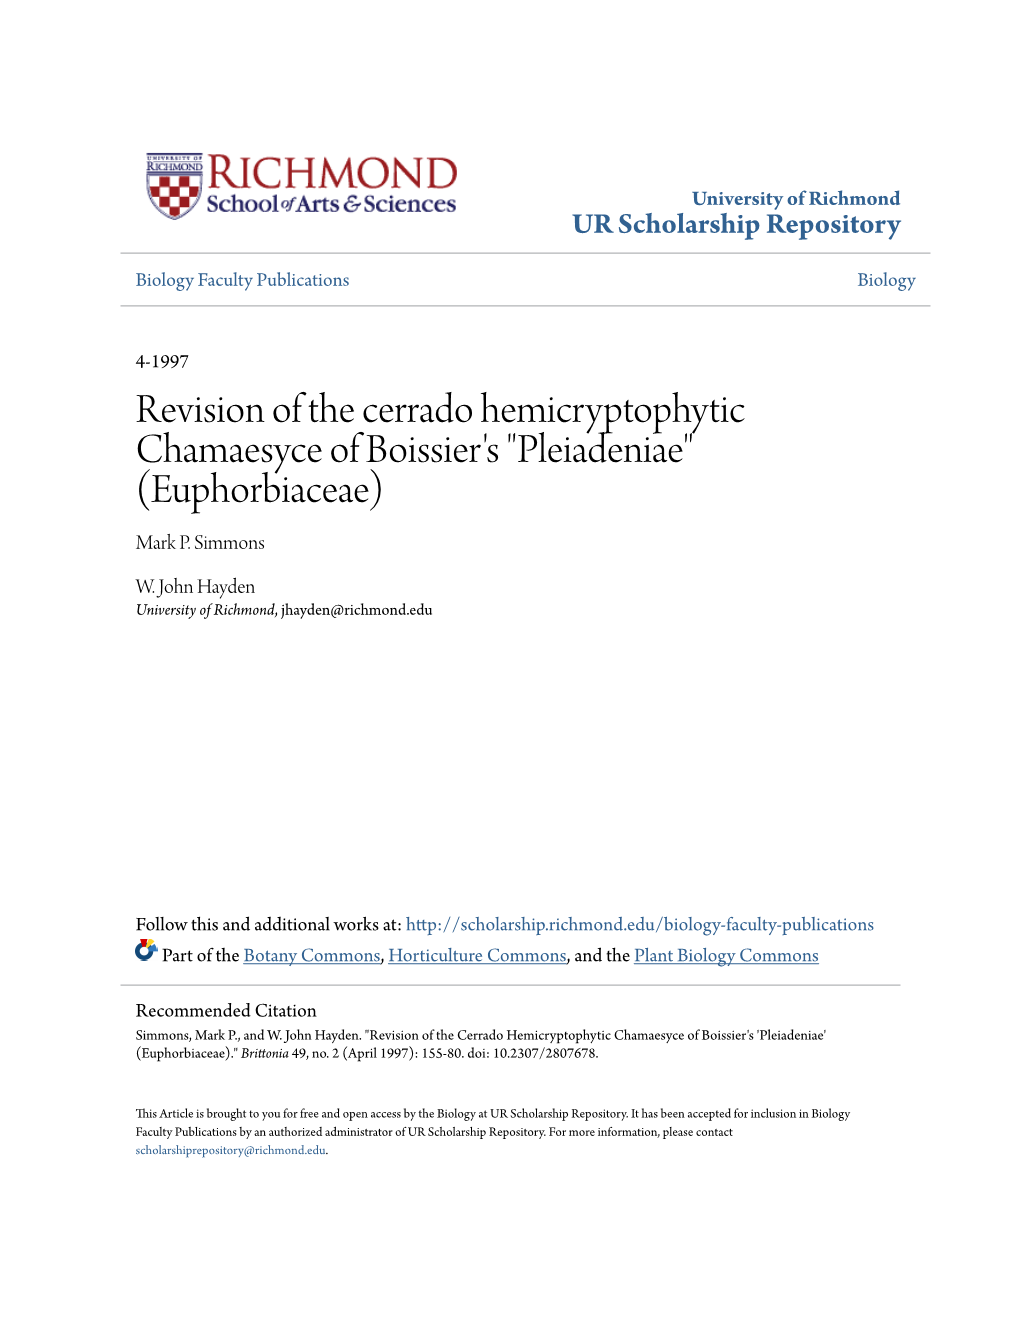 Revision of the Cerrado Hemicryptophytic Chamaesyce of Boissier's "Pleiadeniae" (Euphorbiaceae) Mark P